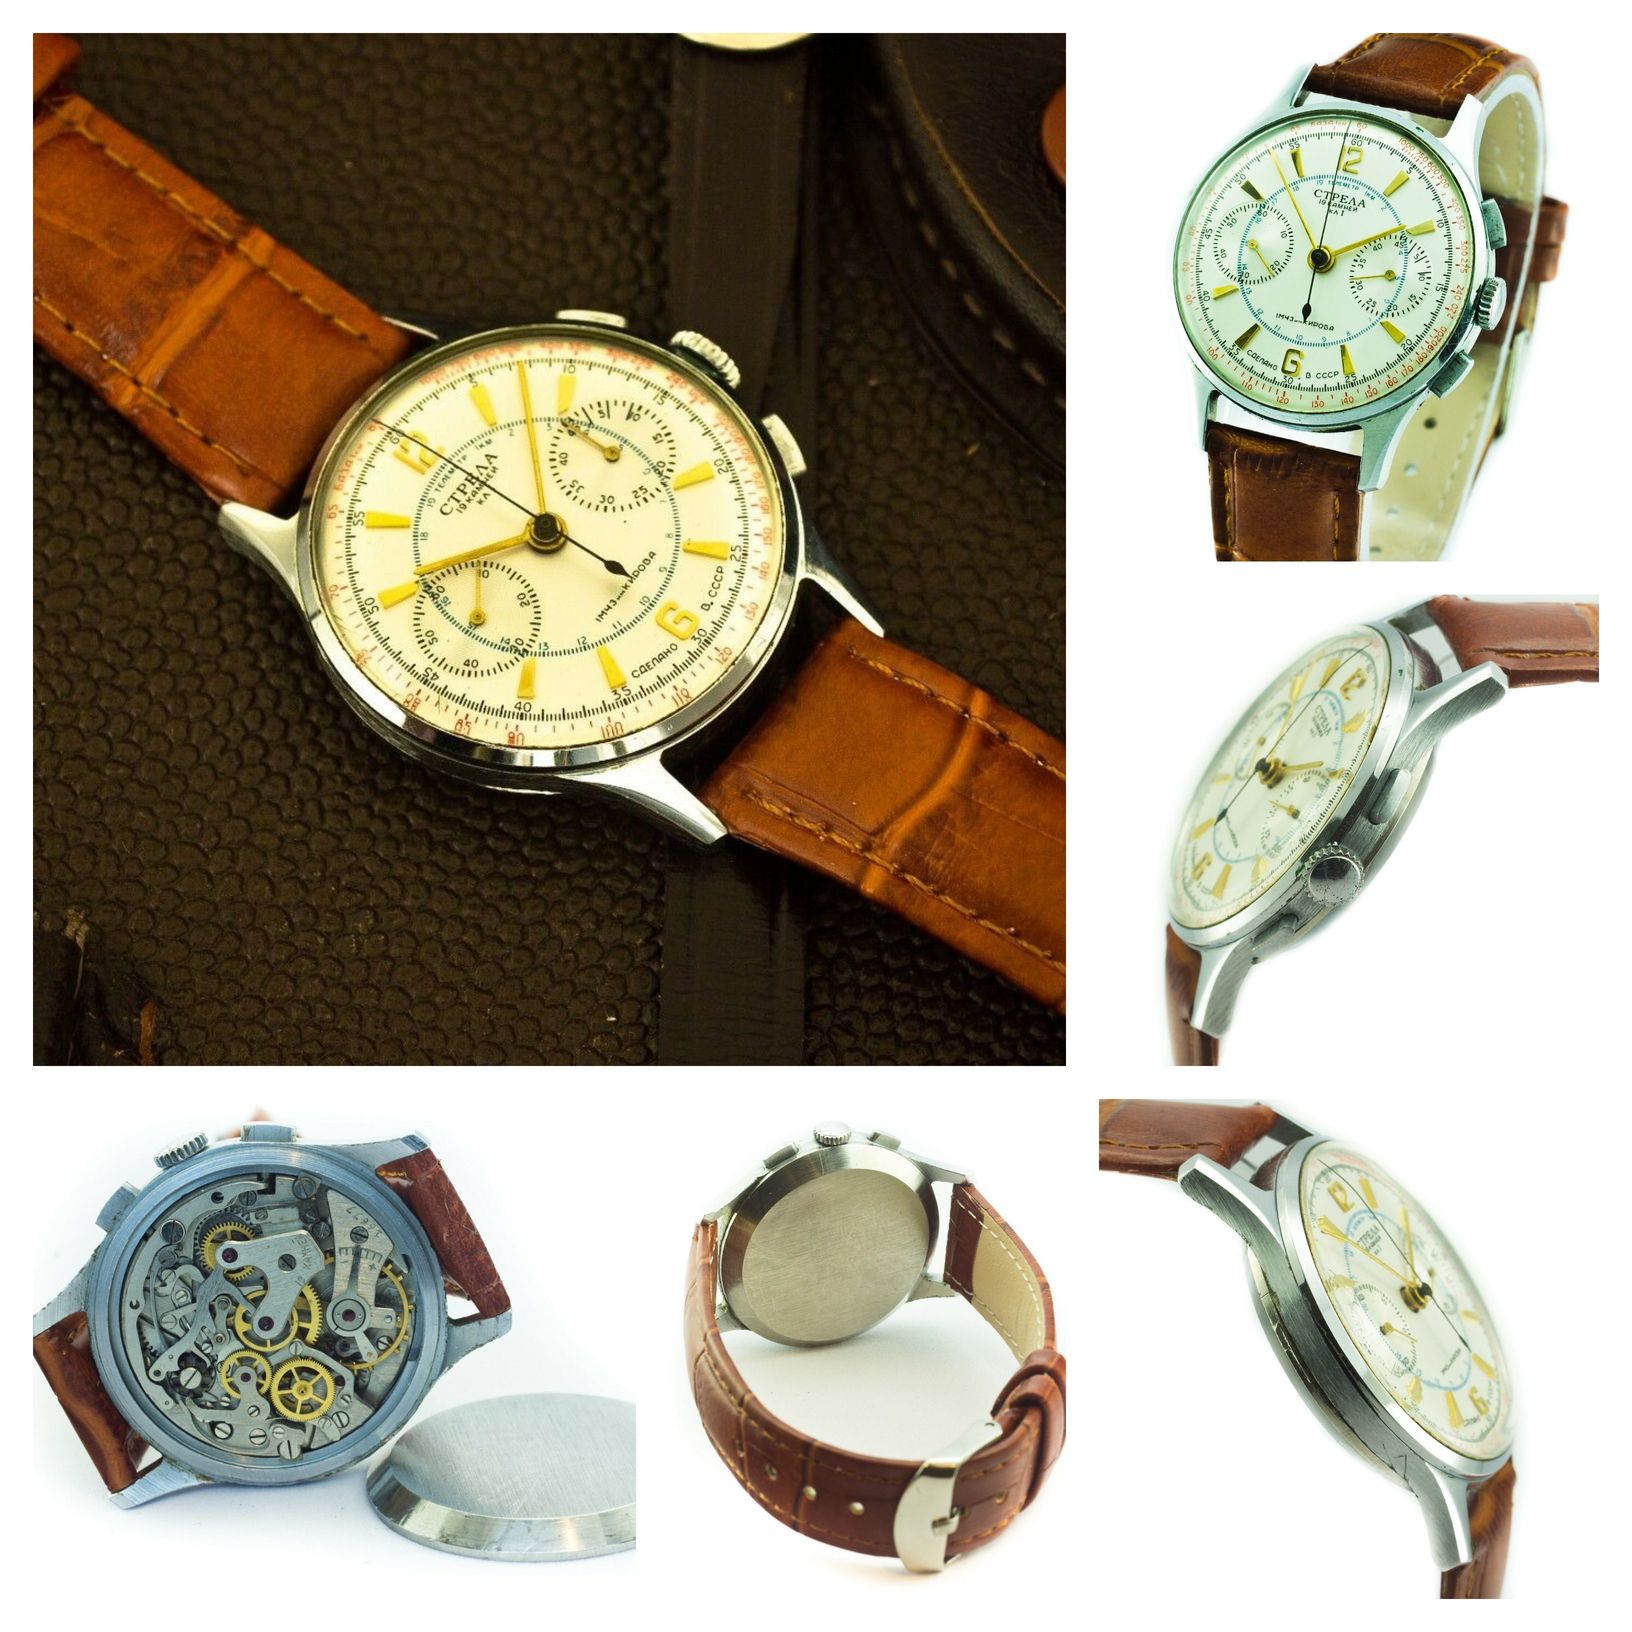 Strela СТРЕЛА Chronograph watch with the Poljot 3017. Credits: eBay seller seller_soviet_stuff